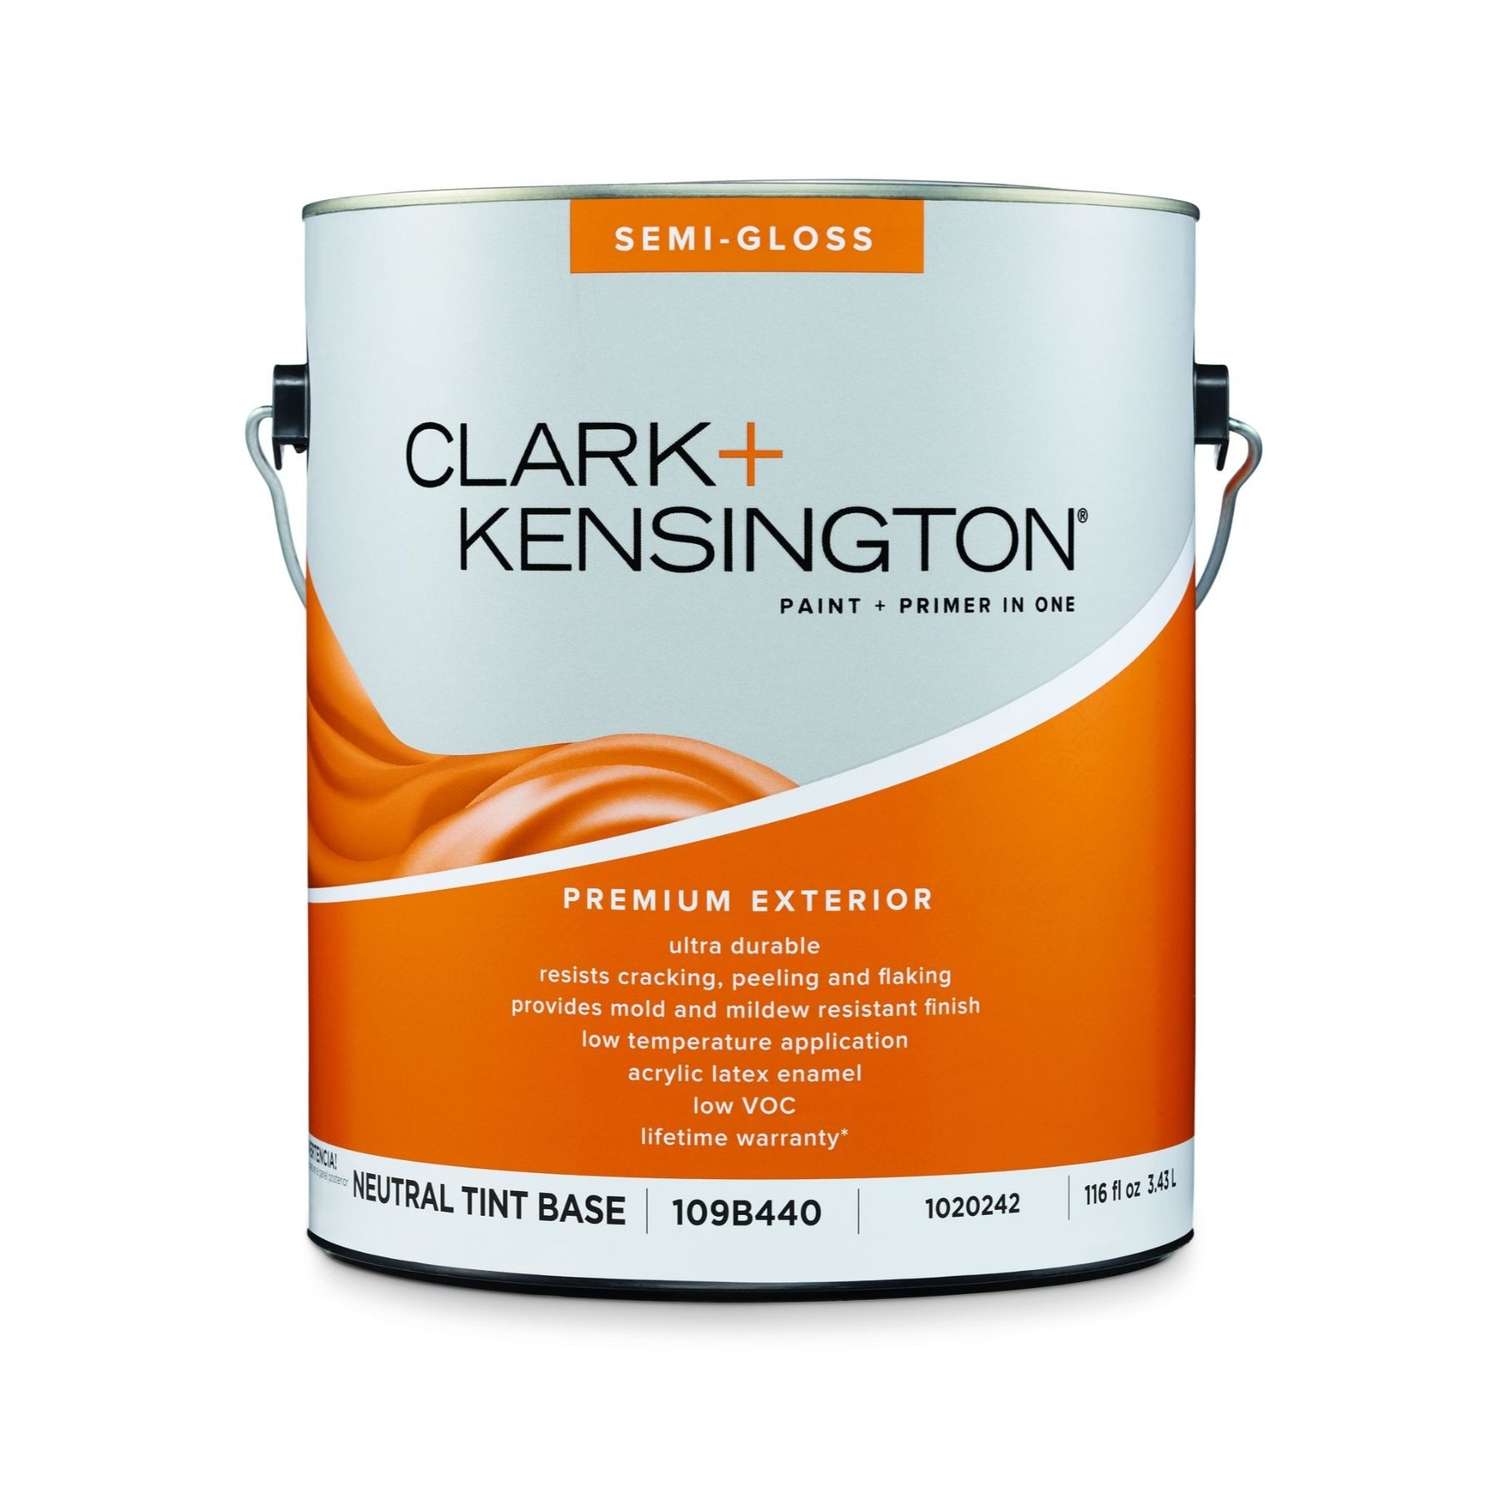 Clark+Kensington Semi-Gloss Tint Base Neutral Base Premium Paint ...